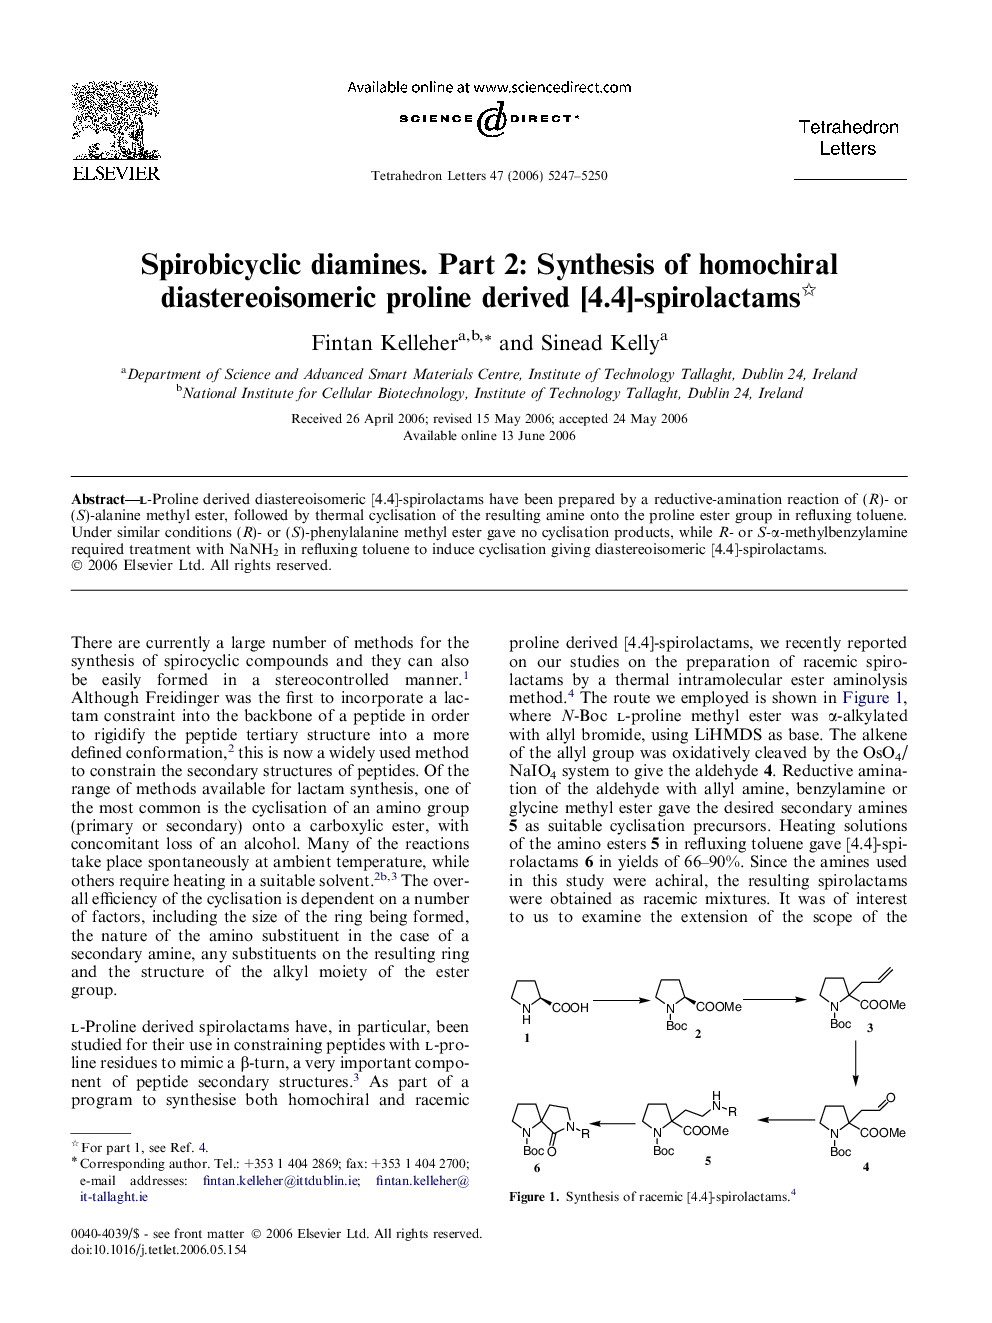 Spirobicyclic diamines. Part 2: Synthesis of homochiral diastereoisomeric proline derived [4.4]-spirolactams